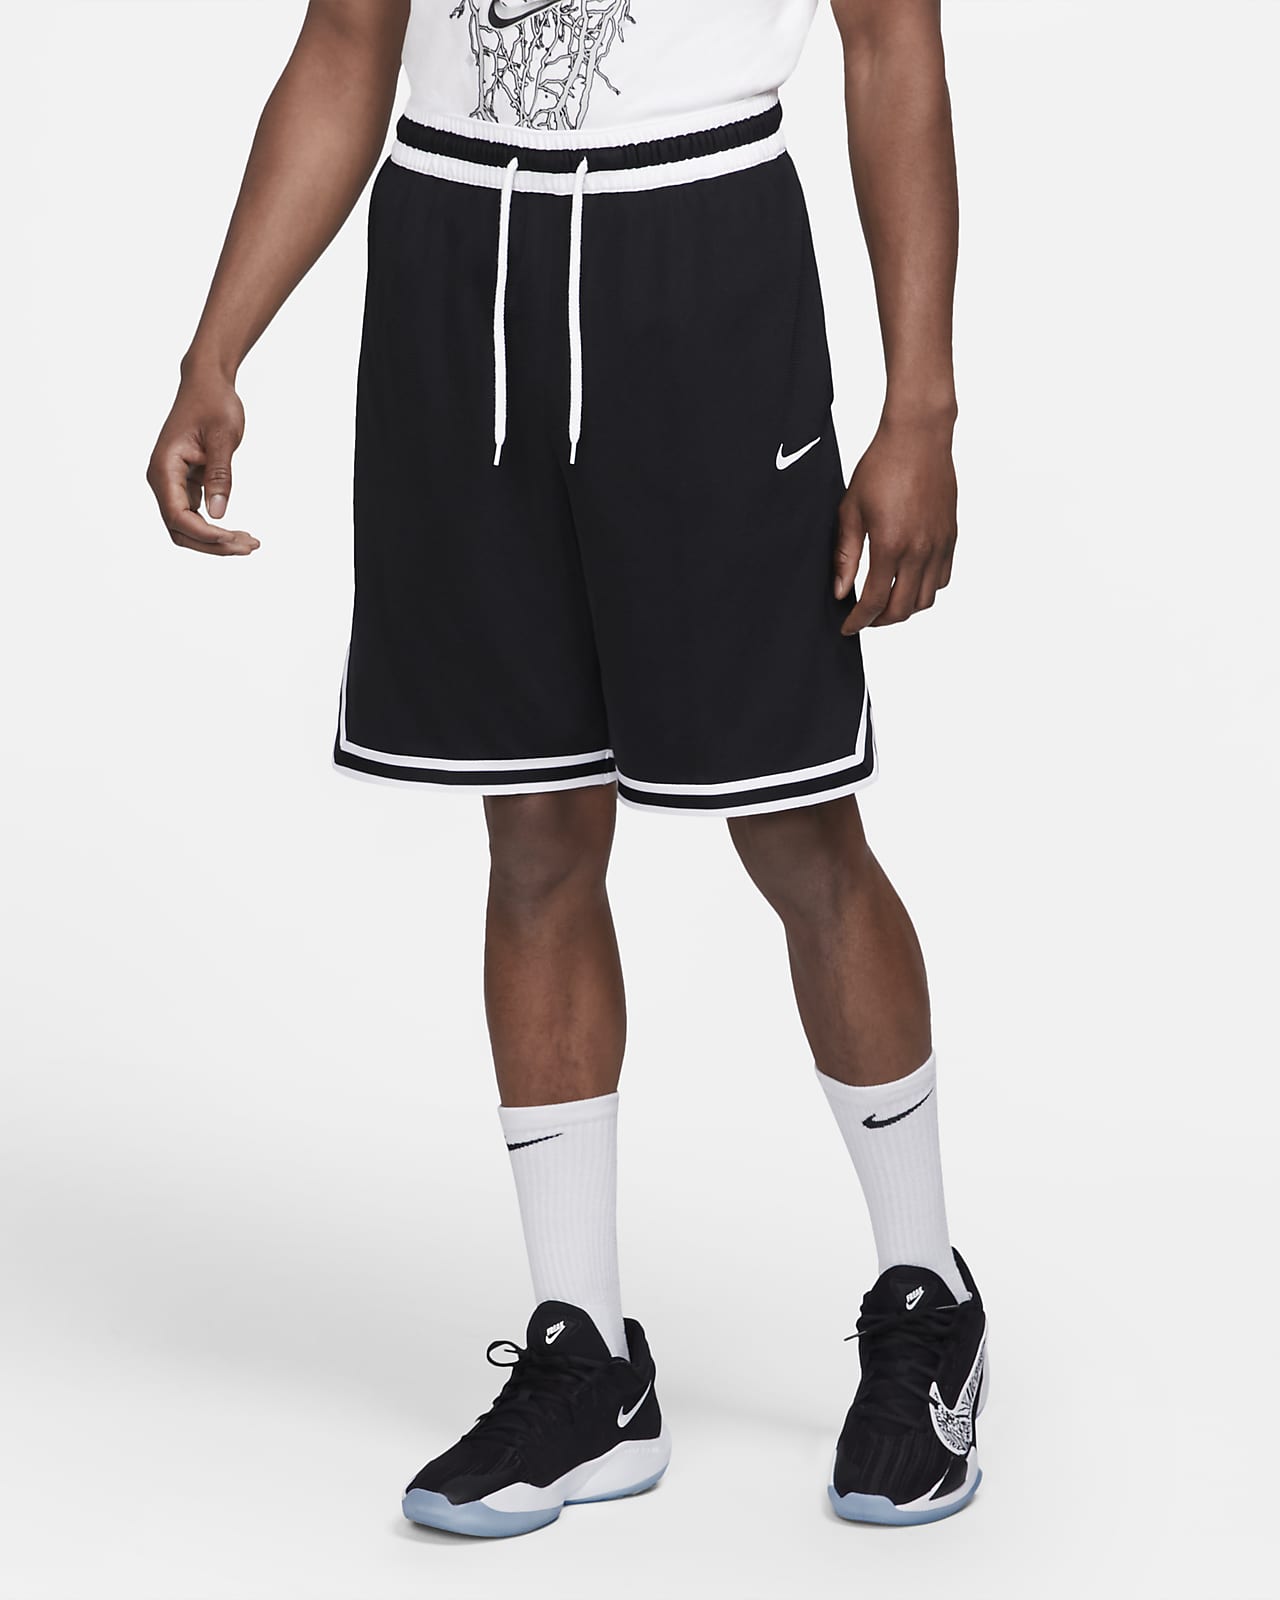 nike short shorts men's basketball